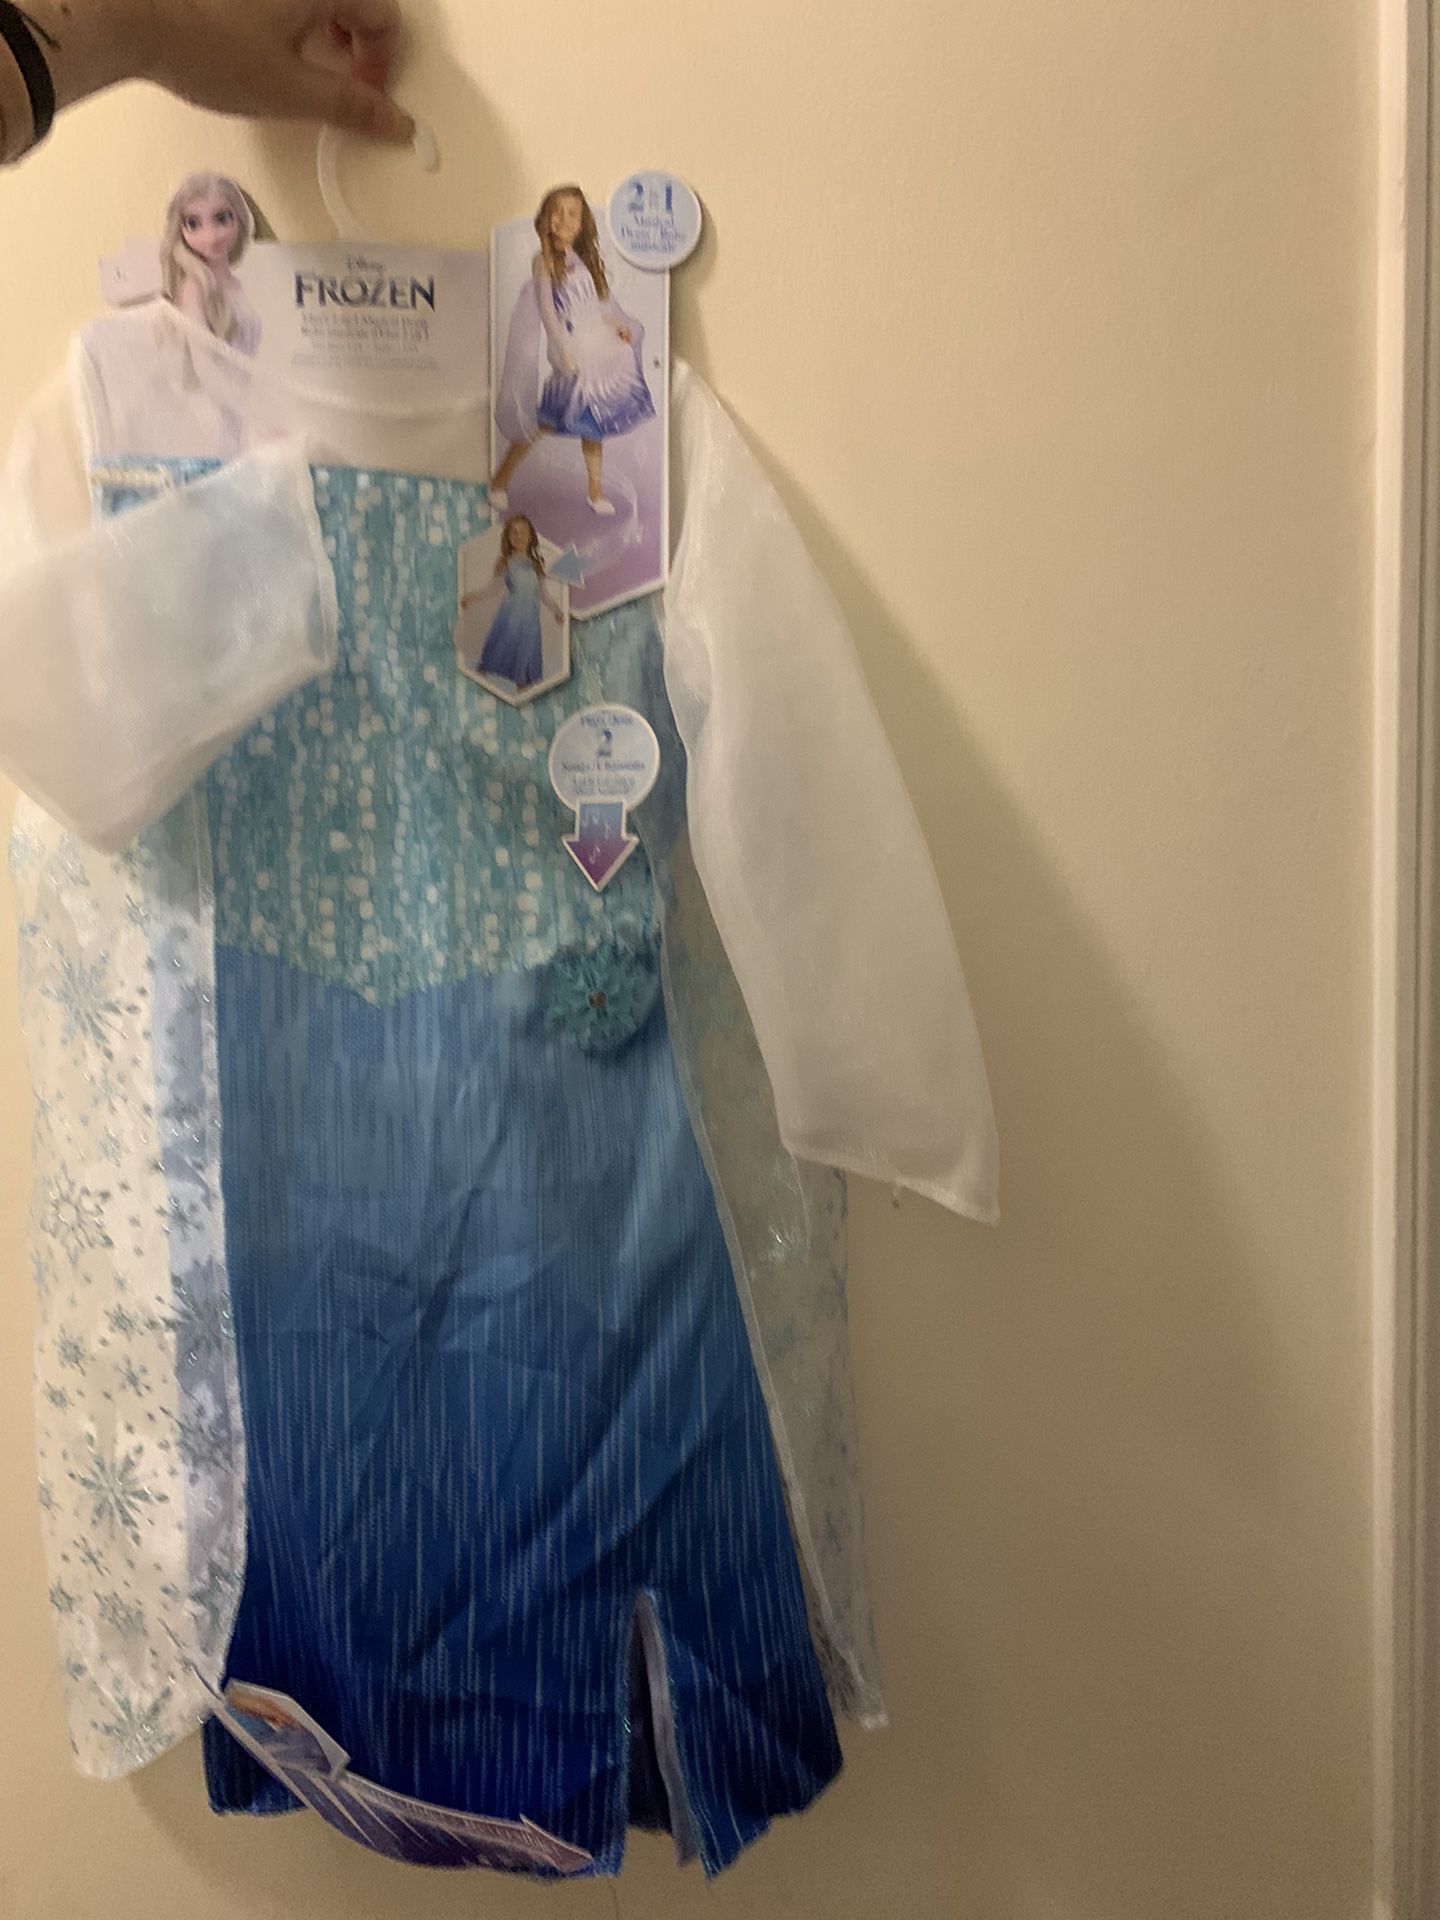 Disney Frozen Elsa’s 2 In 1 Musical Dress